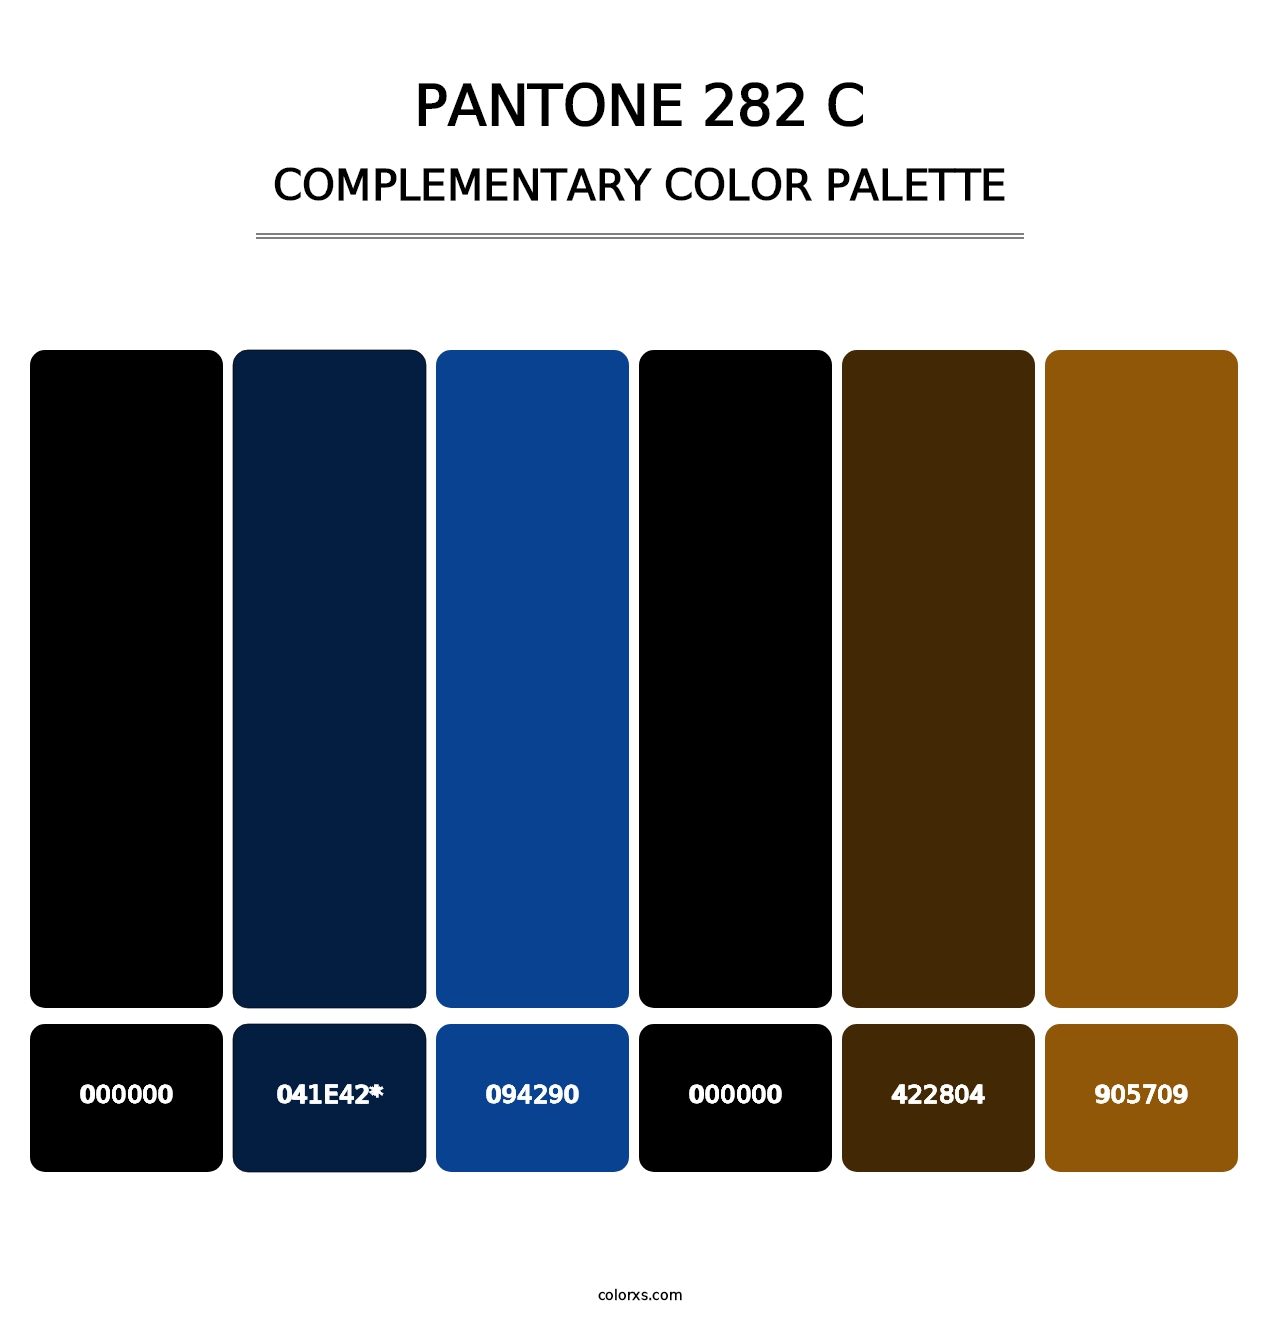 PANTONE 282 C - Complementary Color Palette